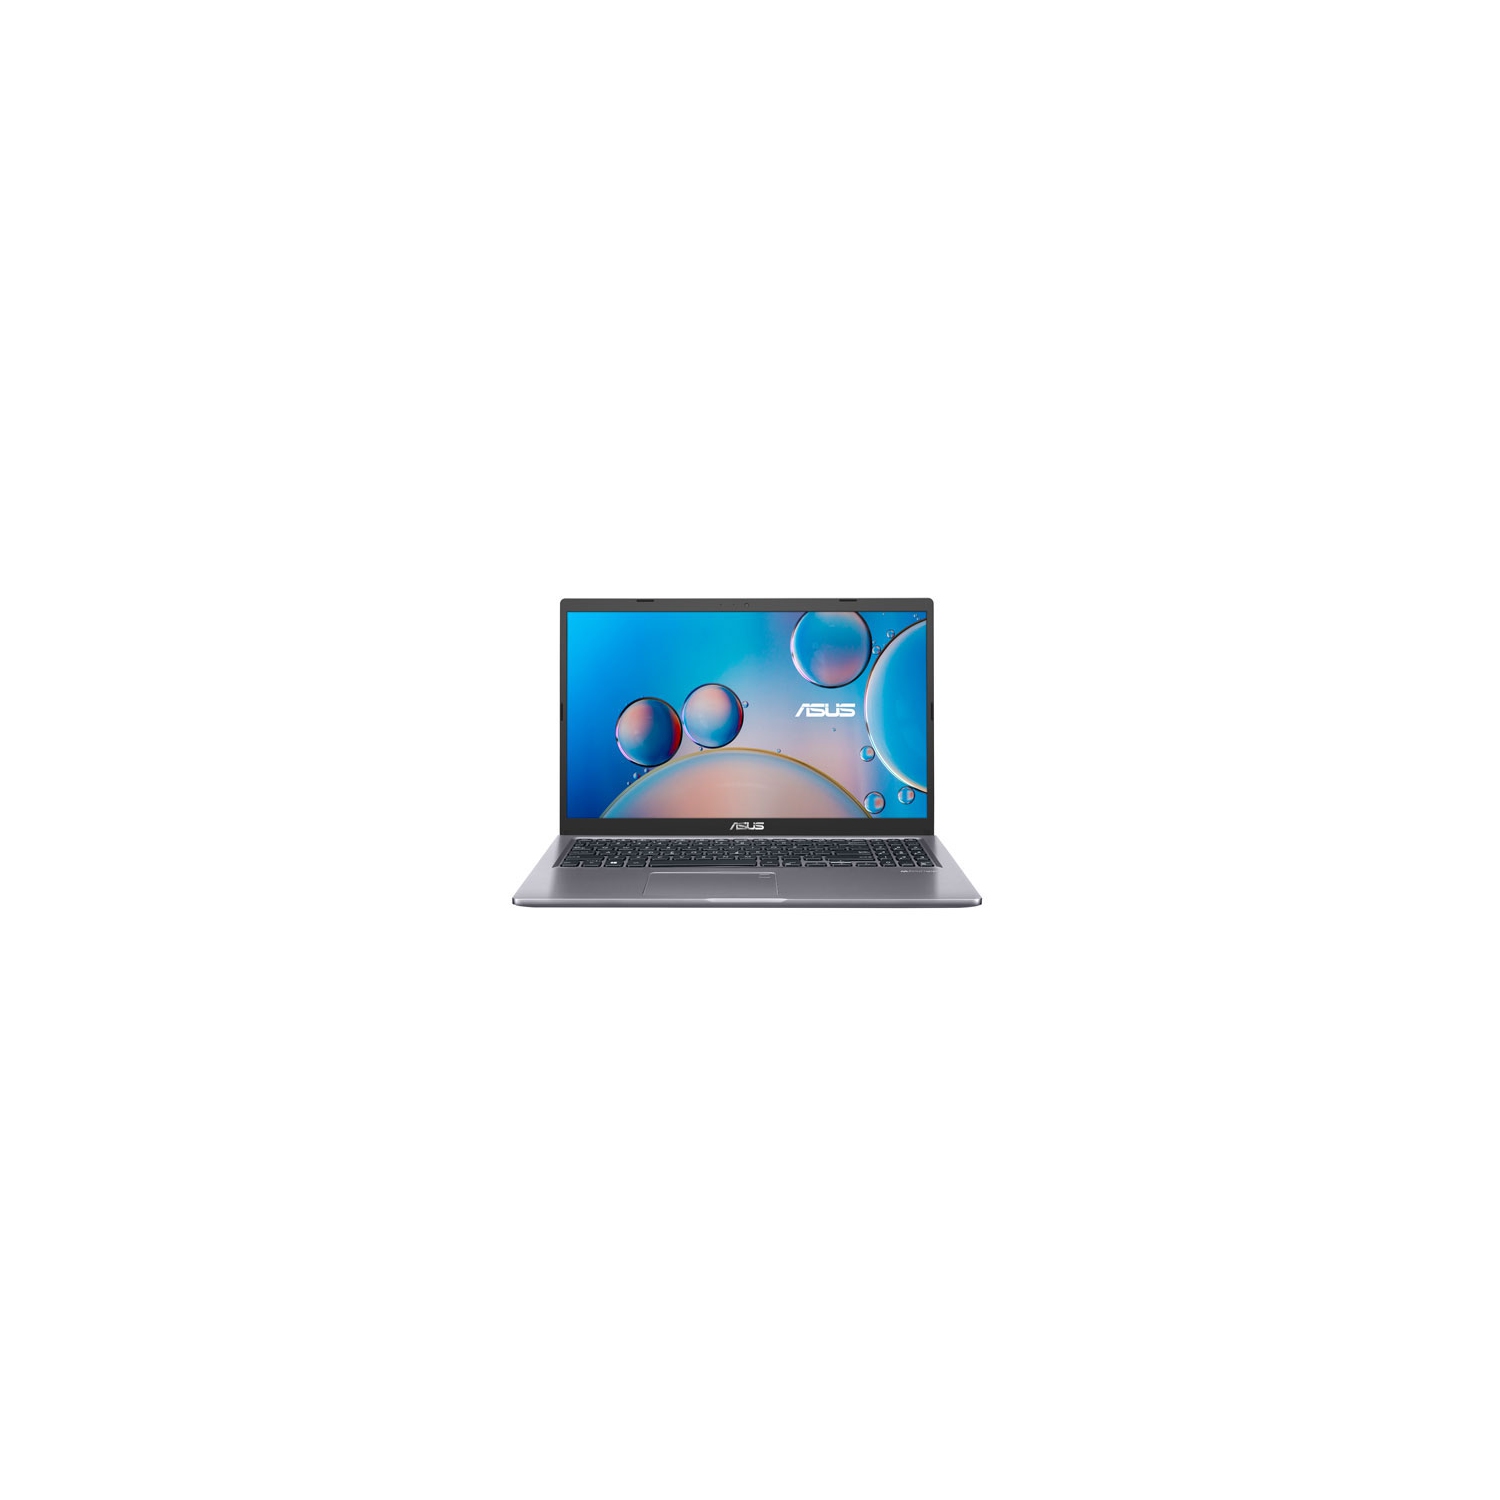 Refurbished (Good) - ASUS X515MA 15.6" Laptop - Slate Grey (Intel Celeron N4020/128GB SSD/4GB RAM/Win 10 Home S)